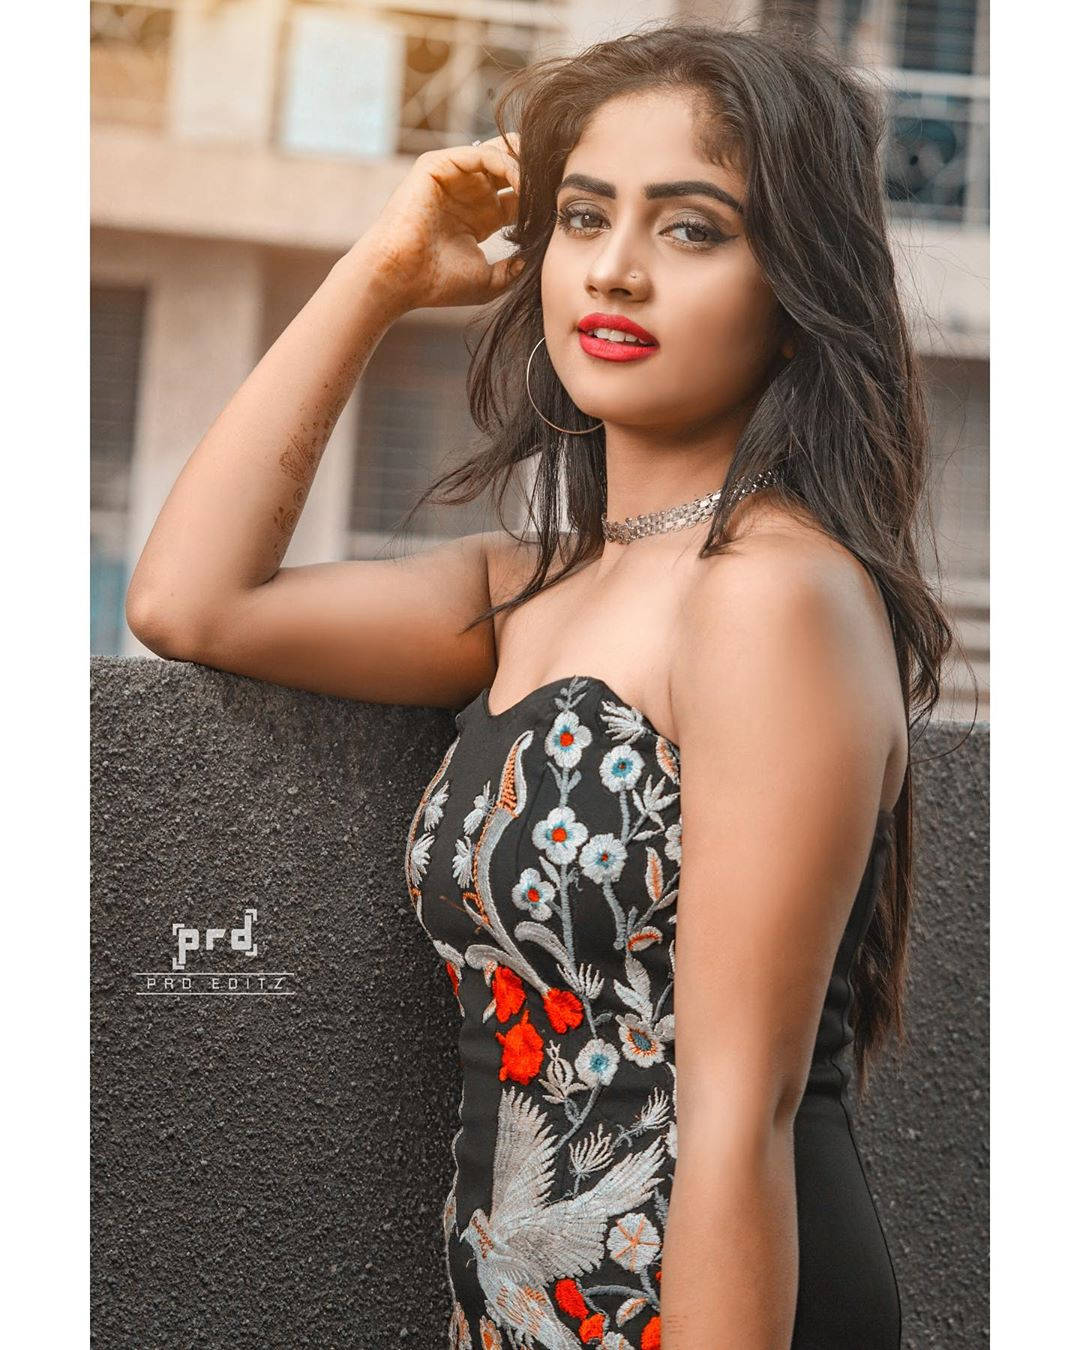 Nisha Guragain In Floral Sleeveless Top Background